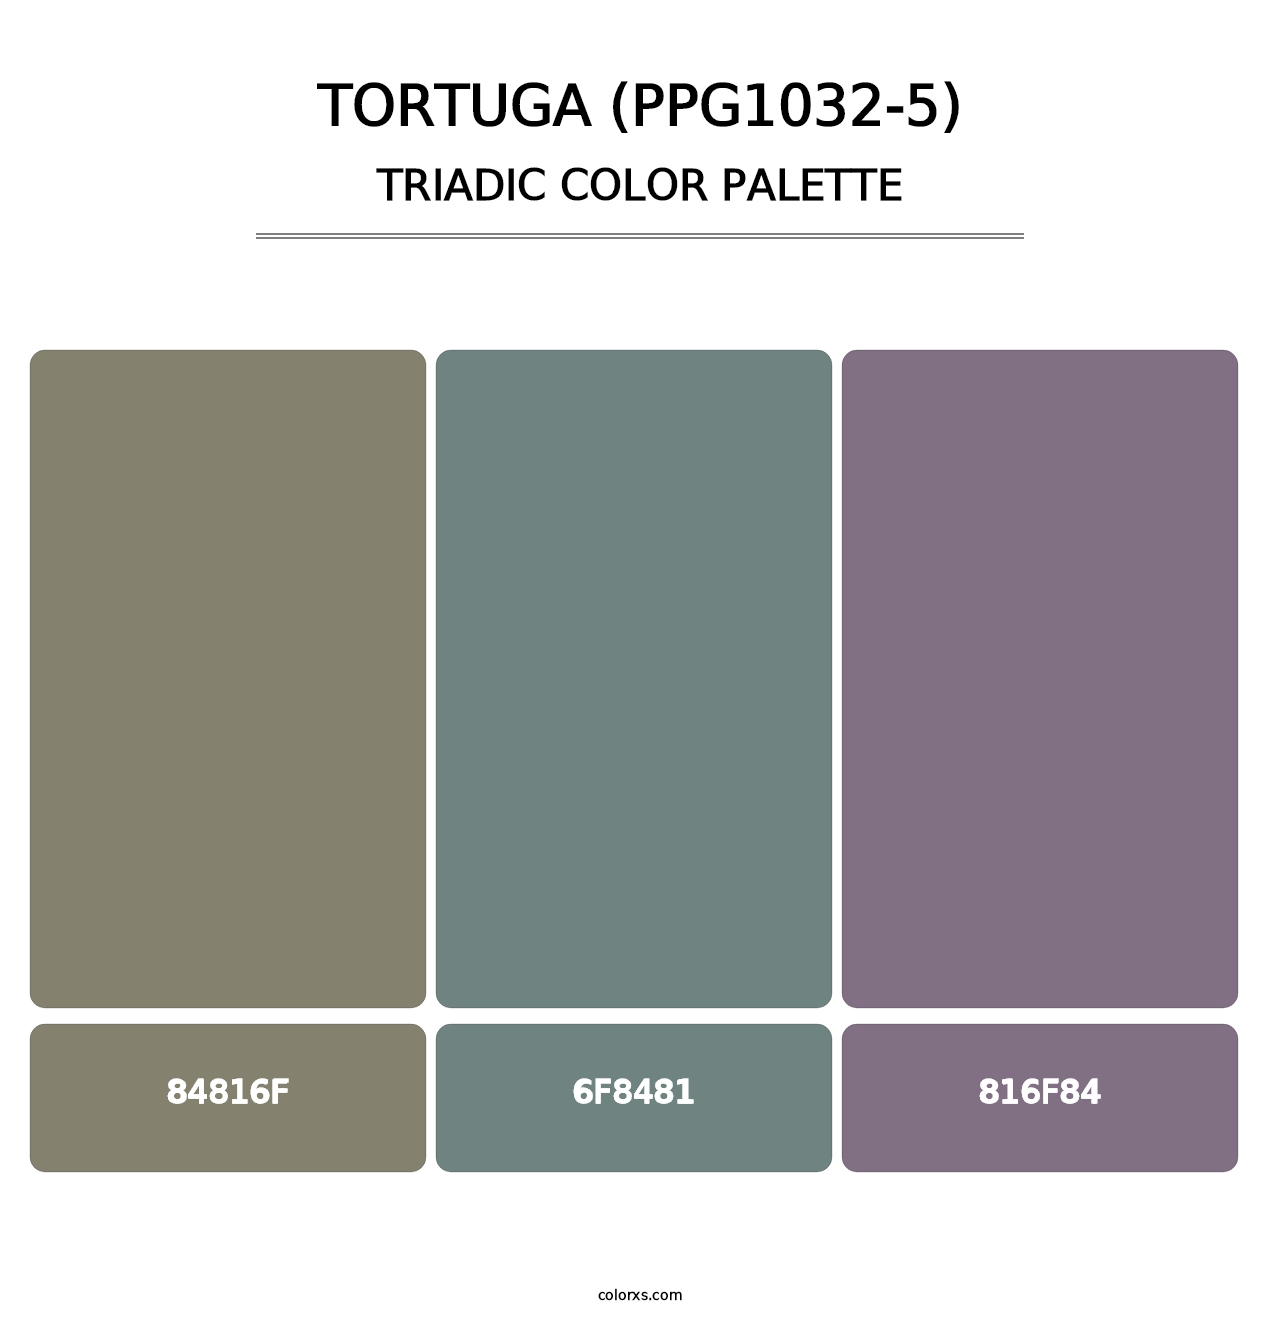 Tortuga (PPG1032-5) - Triadic Color Palette